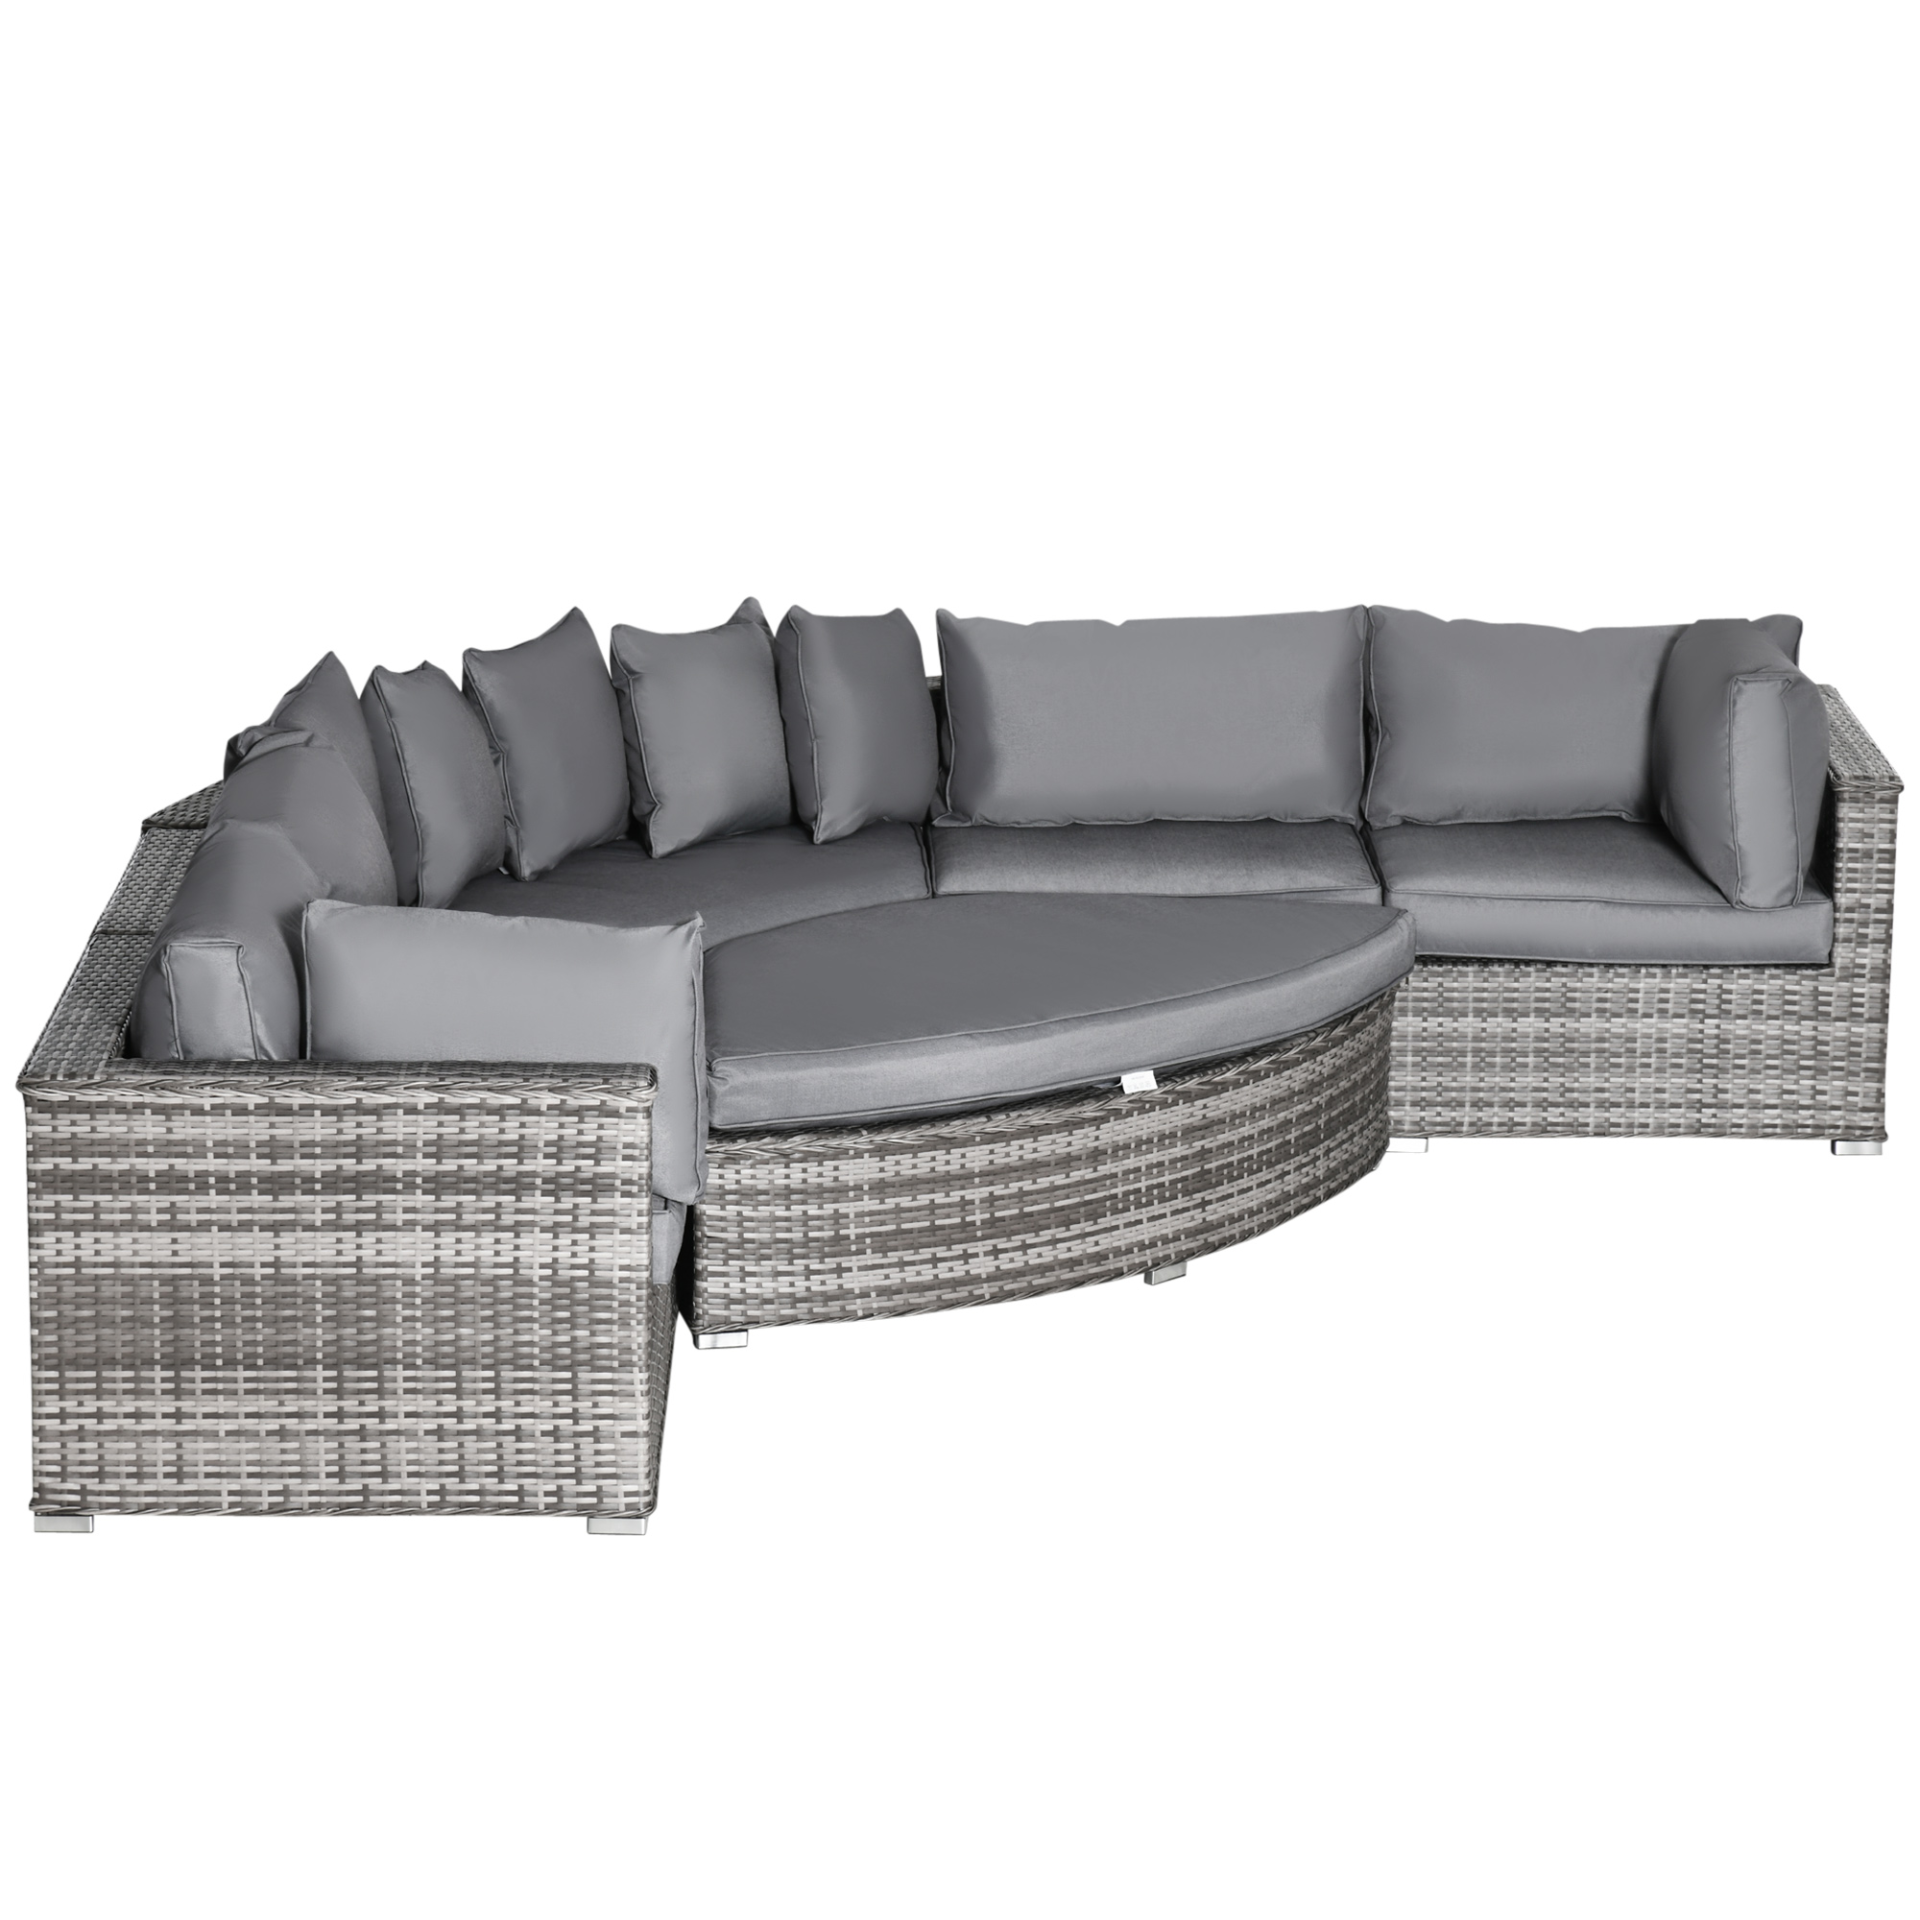 Outsunny 6 PCs Outdoor Rattan Wicker Sofa Set Bonzer Half Round Patio Conversation Furniture Set w/ Angled Corner Design, Cushions Grey